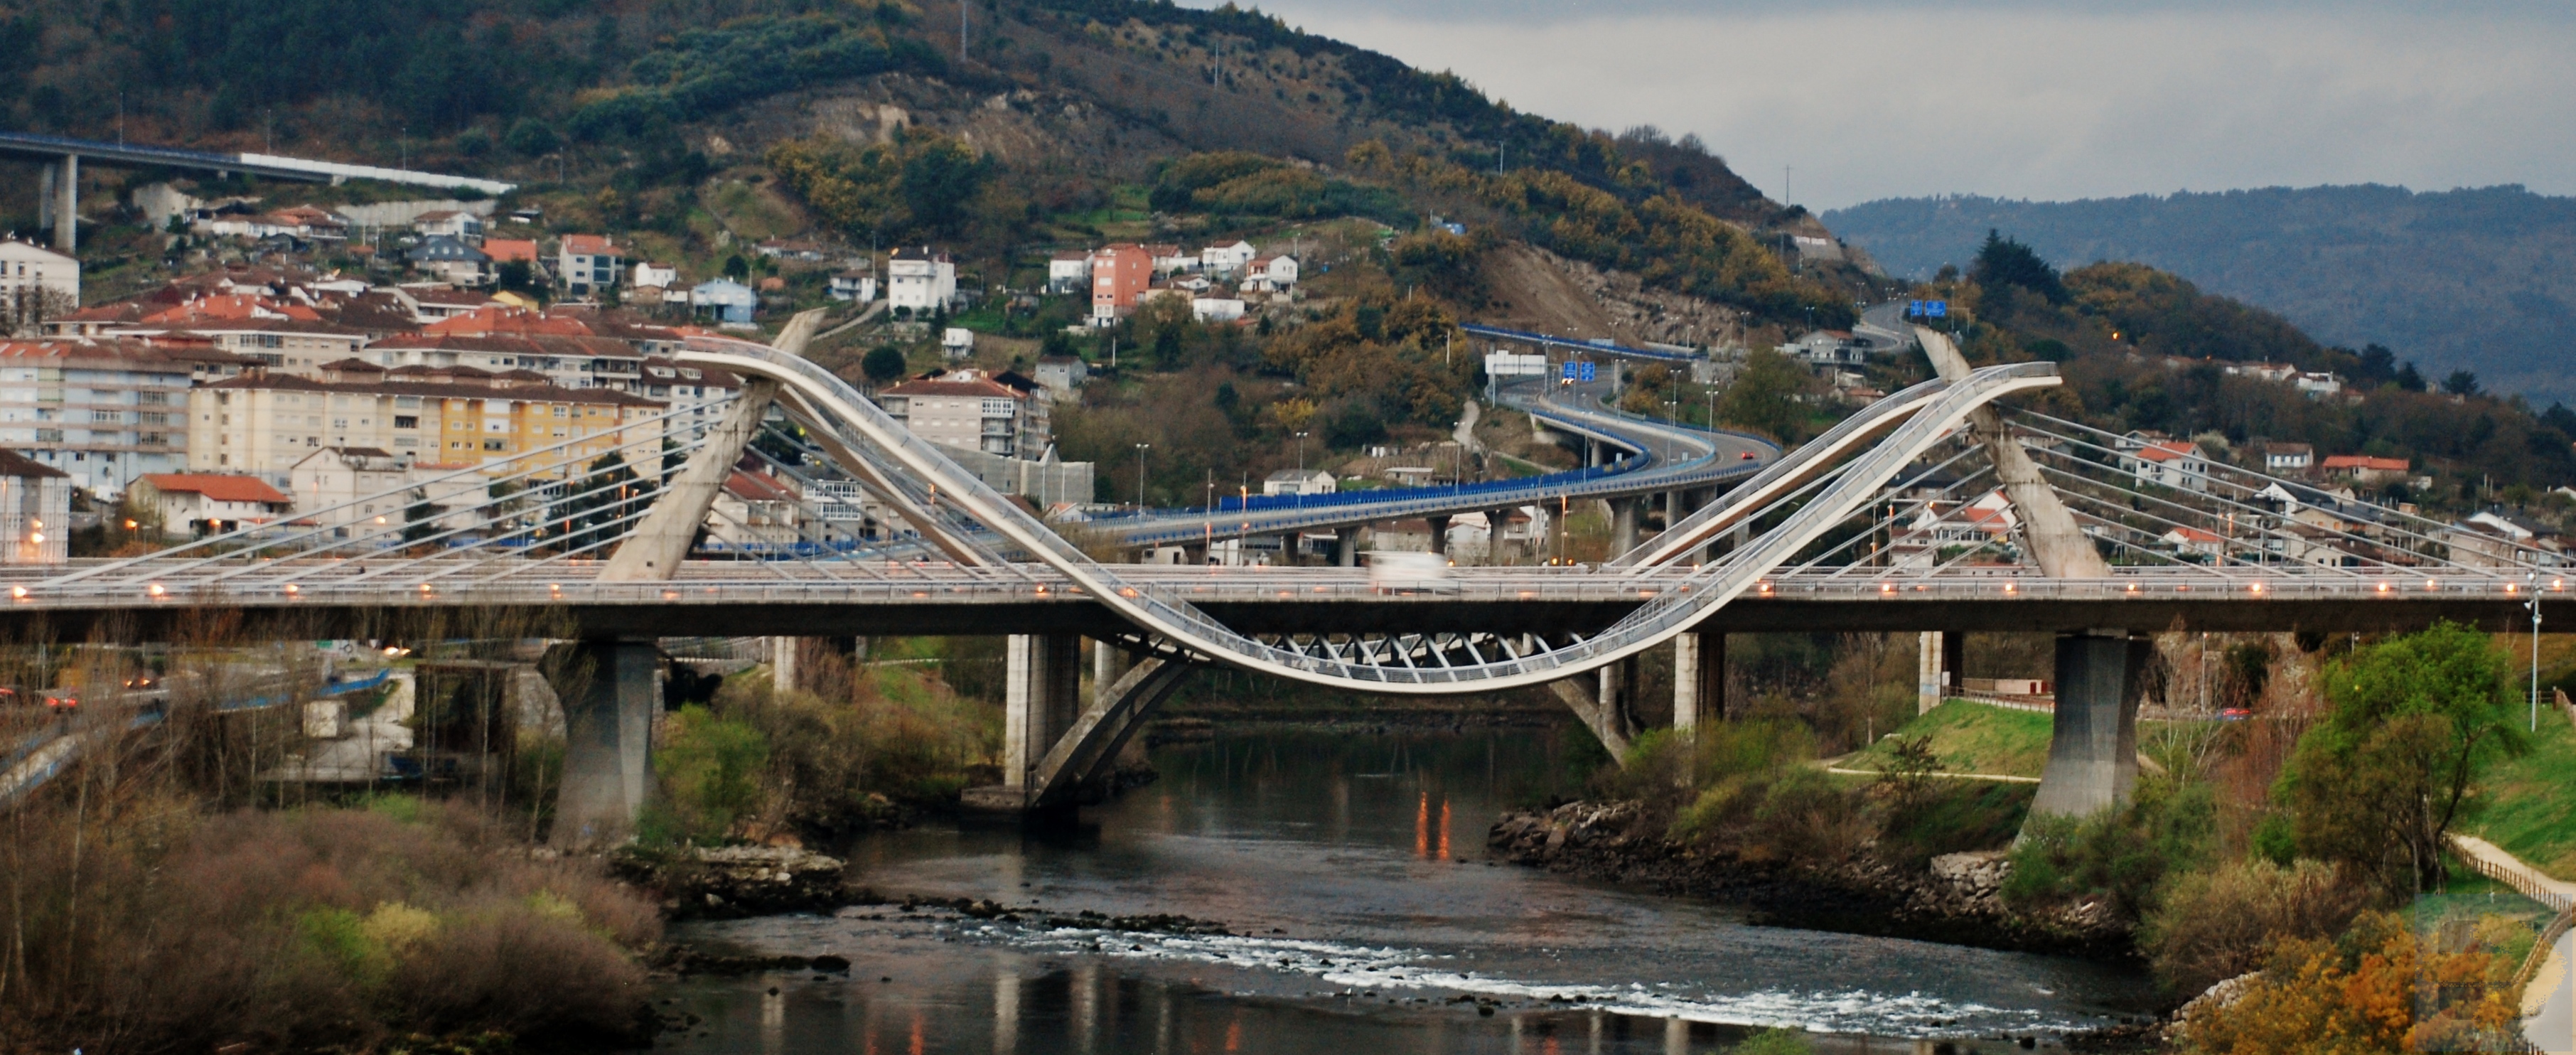 Bridge Ourense taken on St Patrick's day